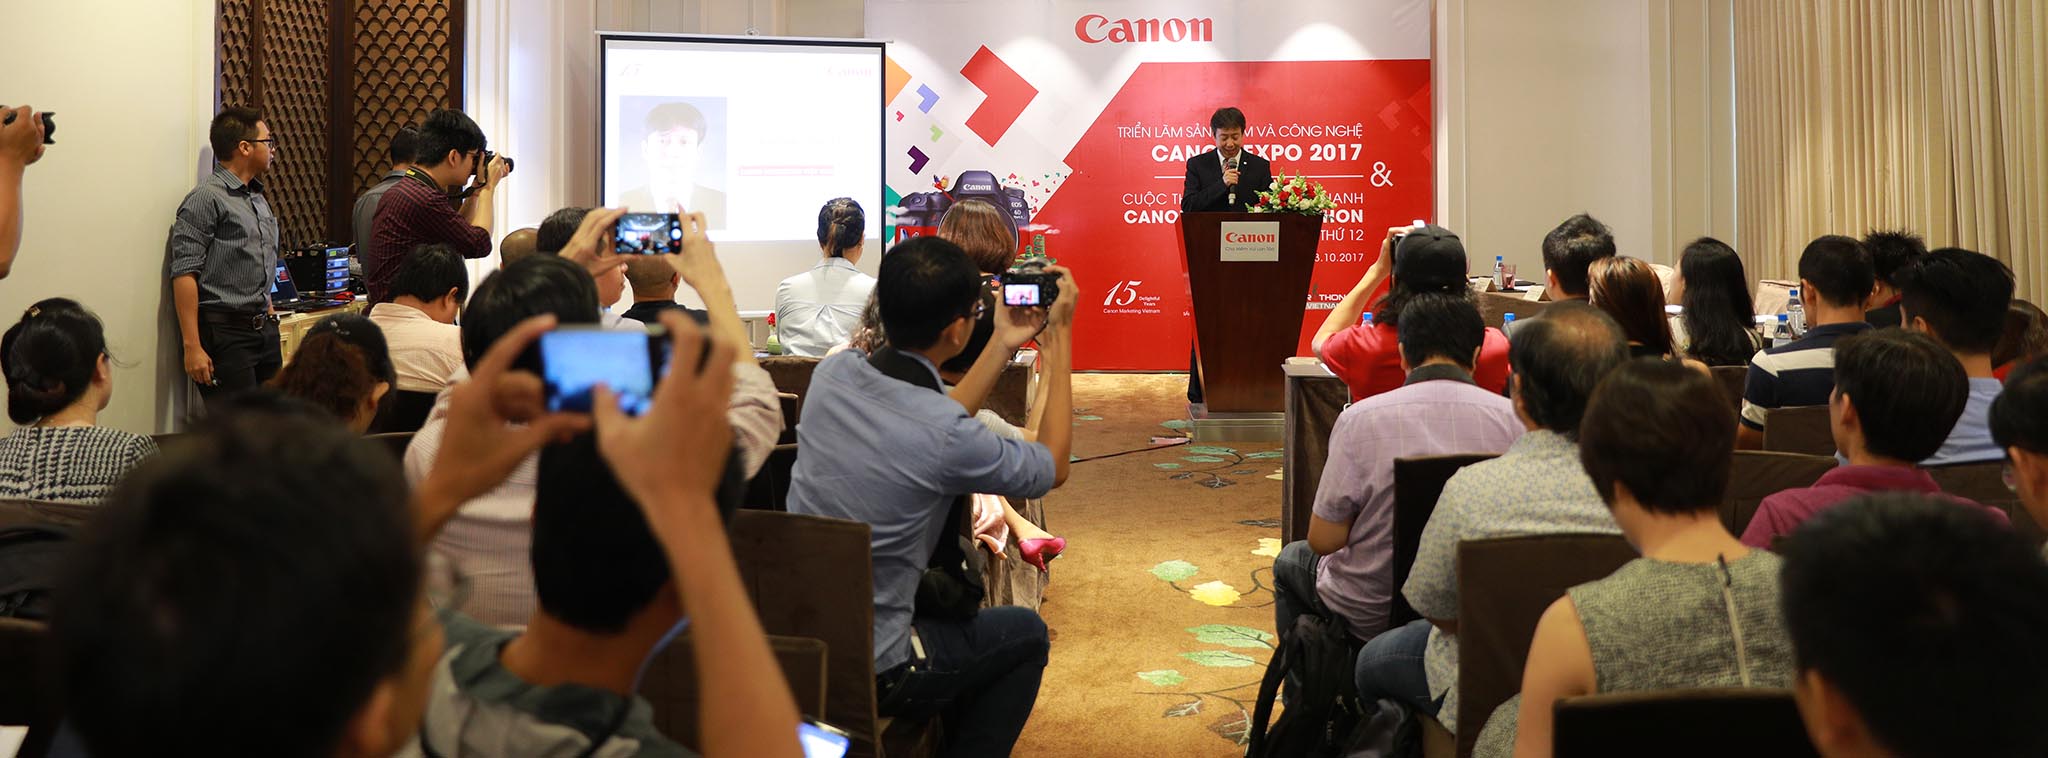 Canon giới thiệu sự kiện Canon EXPO và Canon Photomarathon 2017 tại Việt Nam